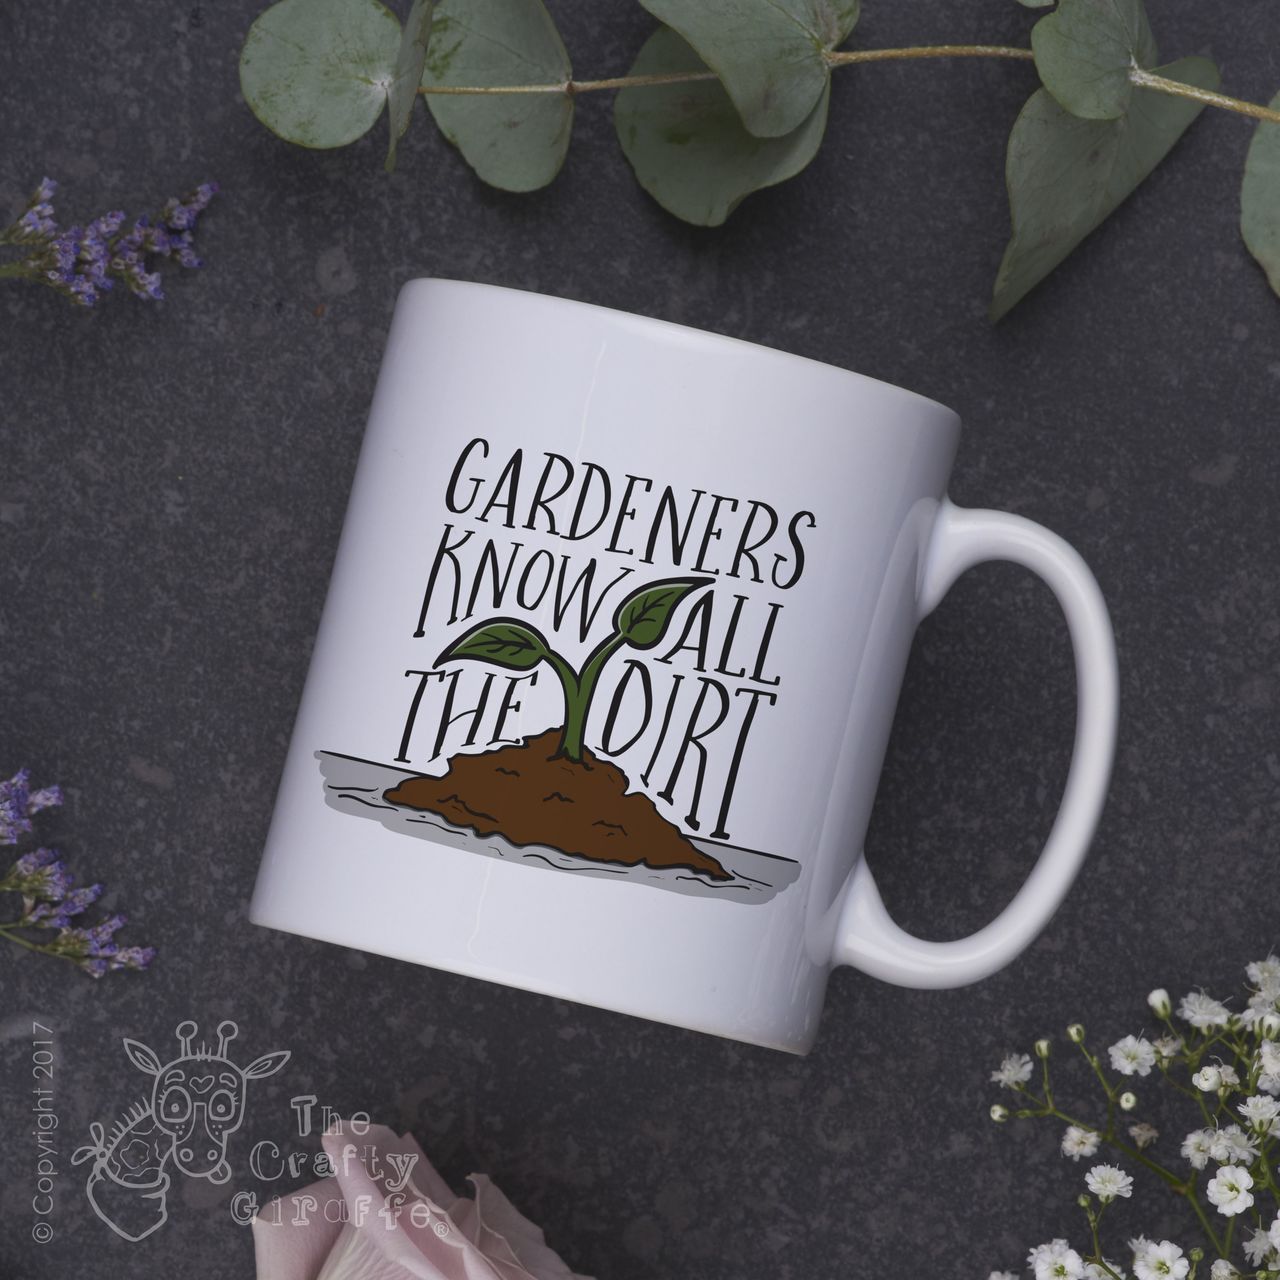 Gardeners know all the dirt mug